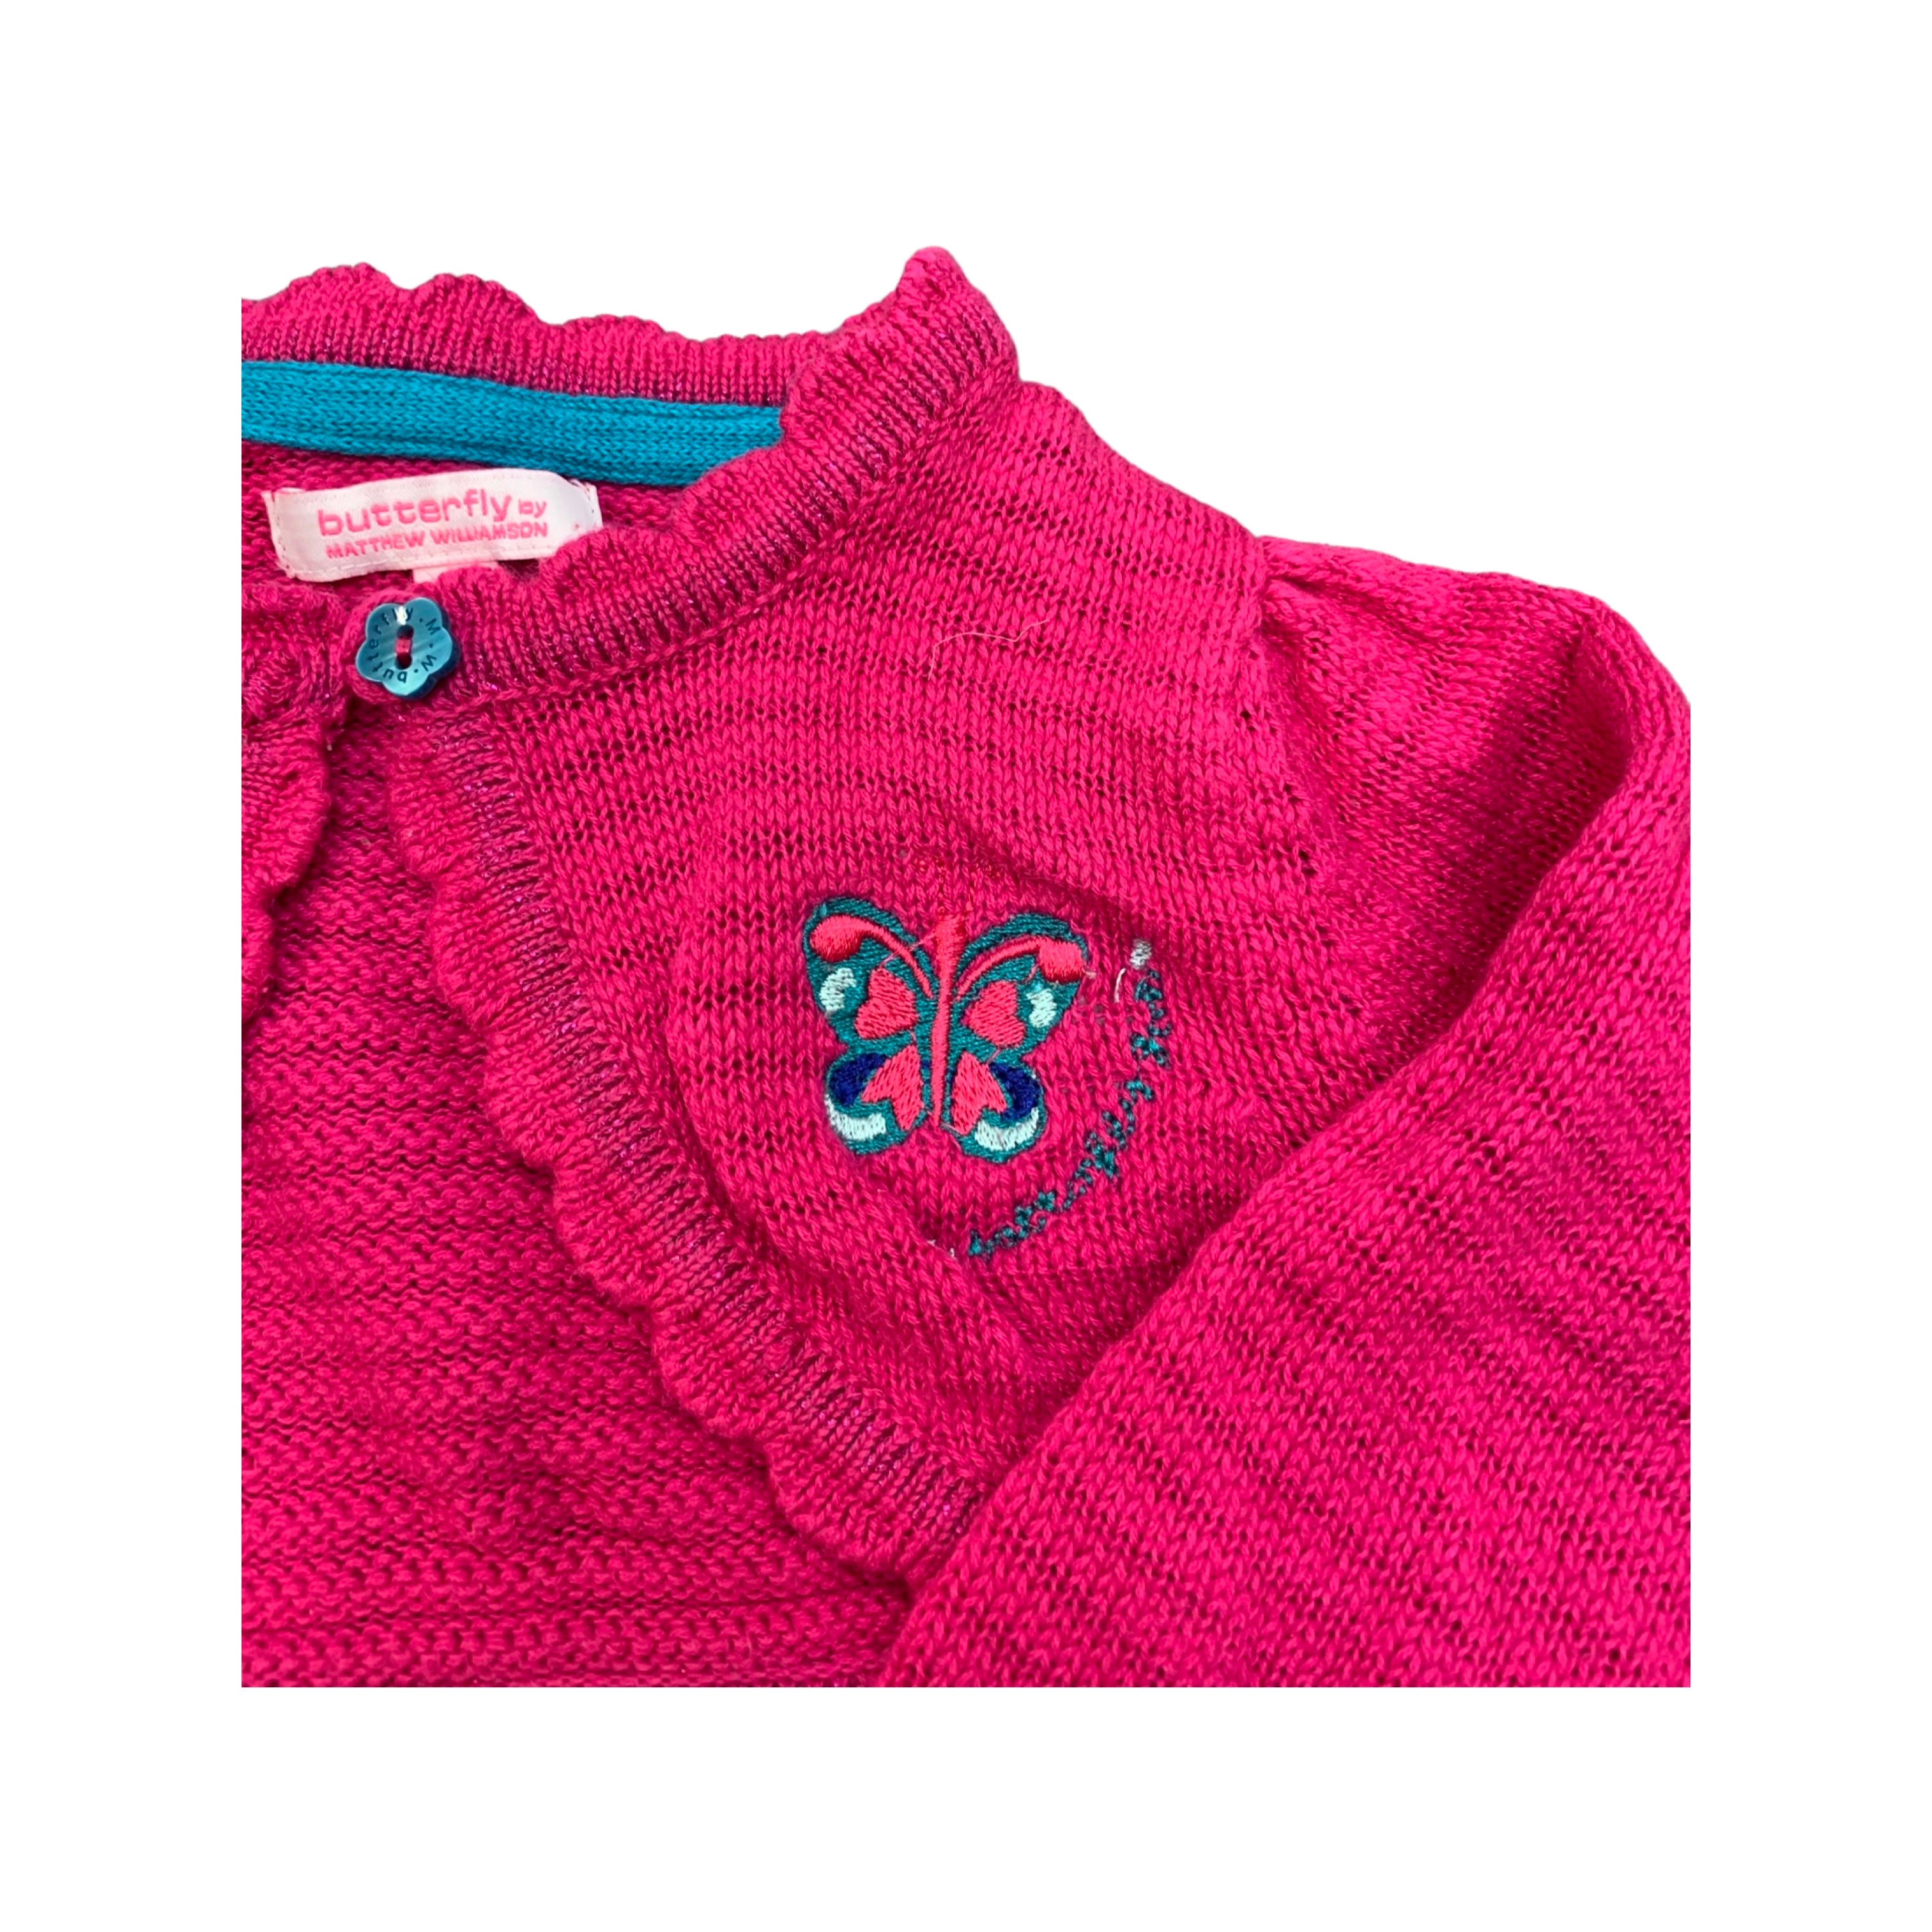 Butterflies @ Debenhams Knit Cropped Cardigan Baby Girl 3-6 Months 17.5 lbs